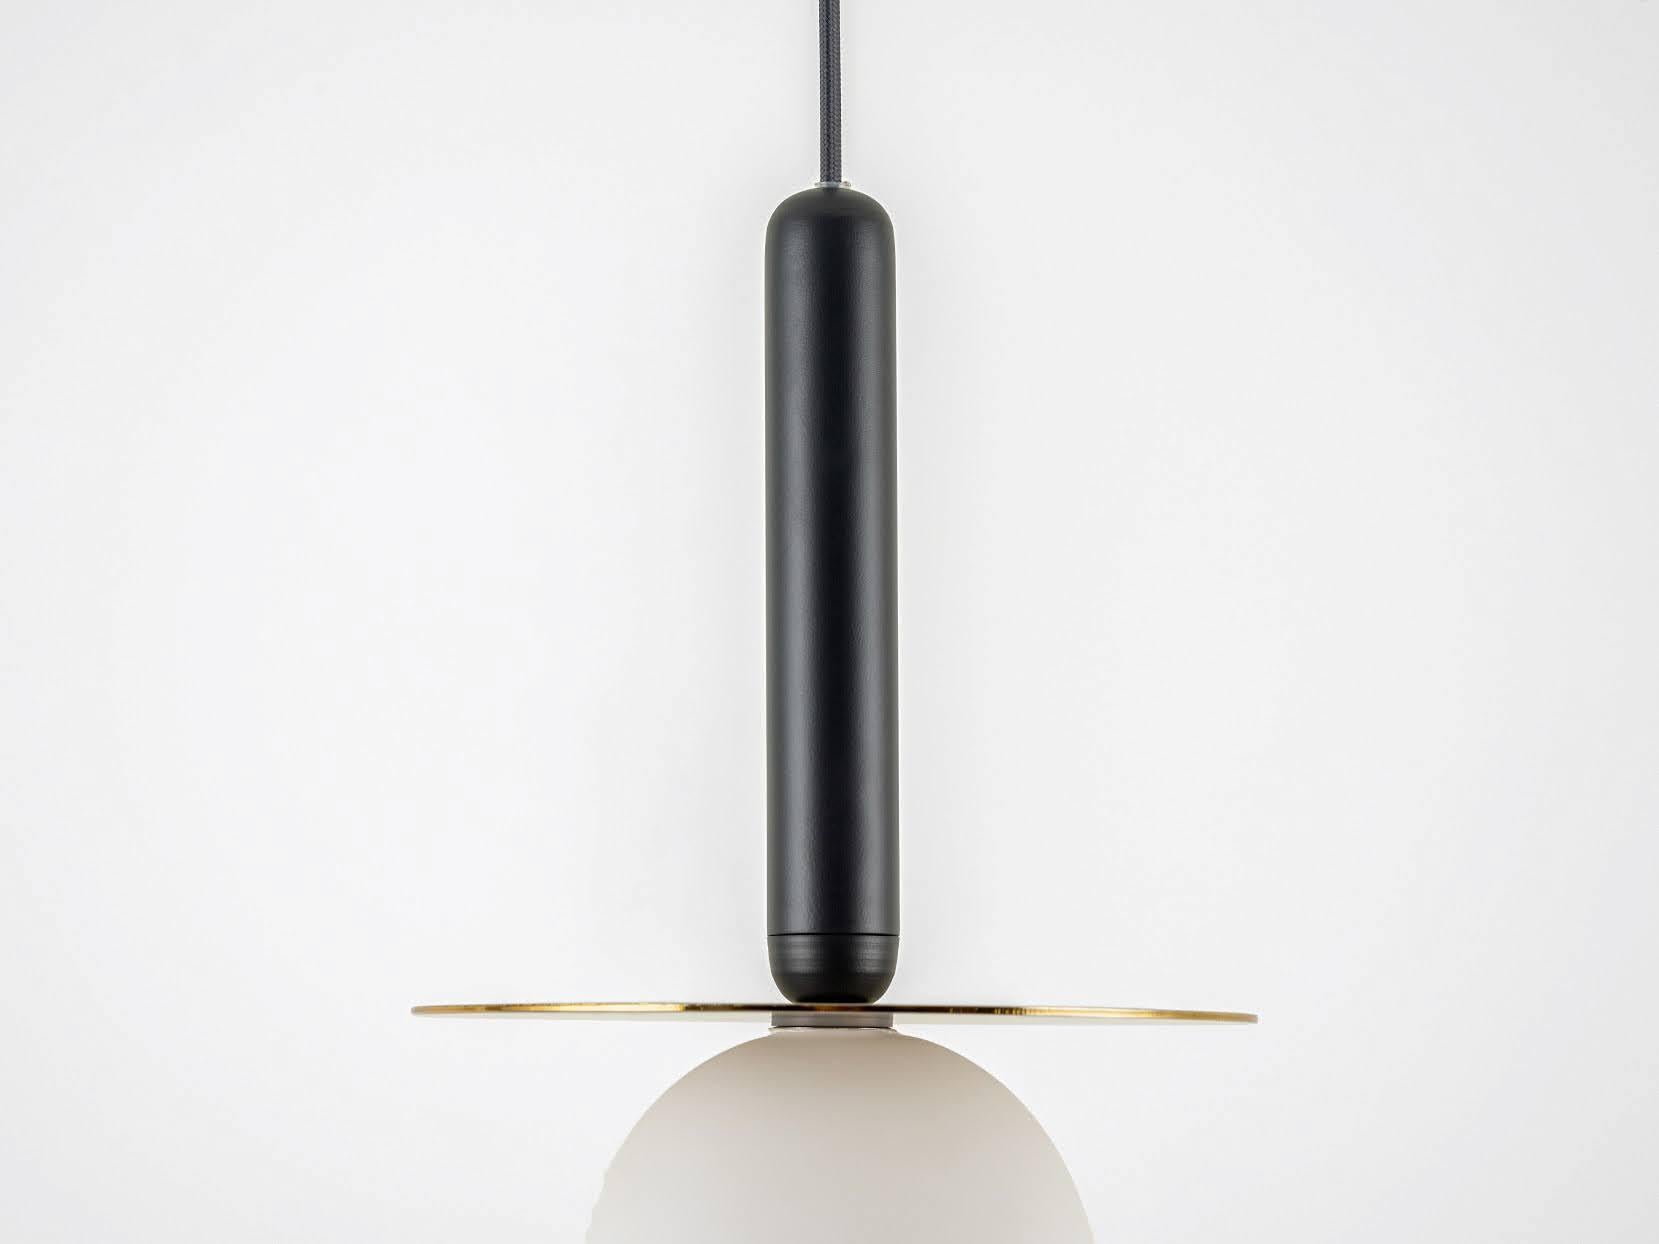 Scandinavian Modern Houseof Brass Disk Plate Metal Pendant Ceiling Light with Glass Shade For Sale